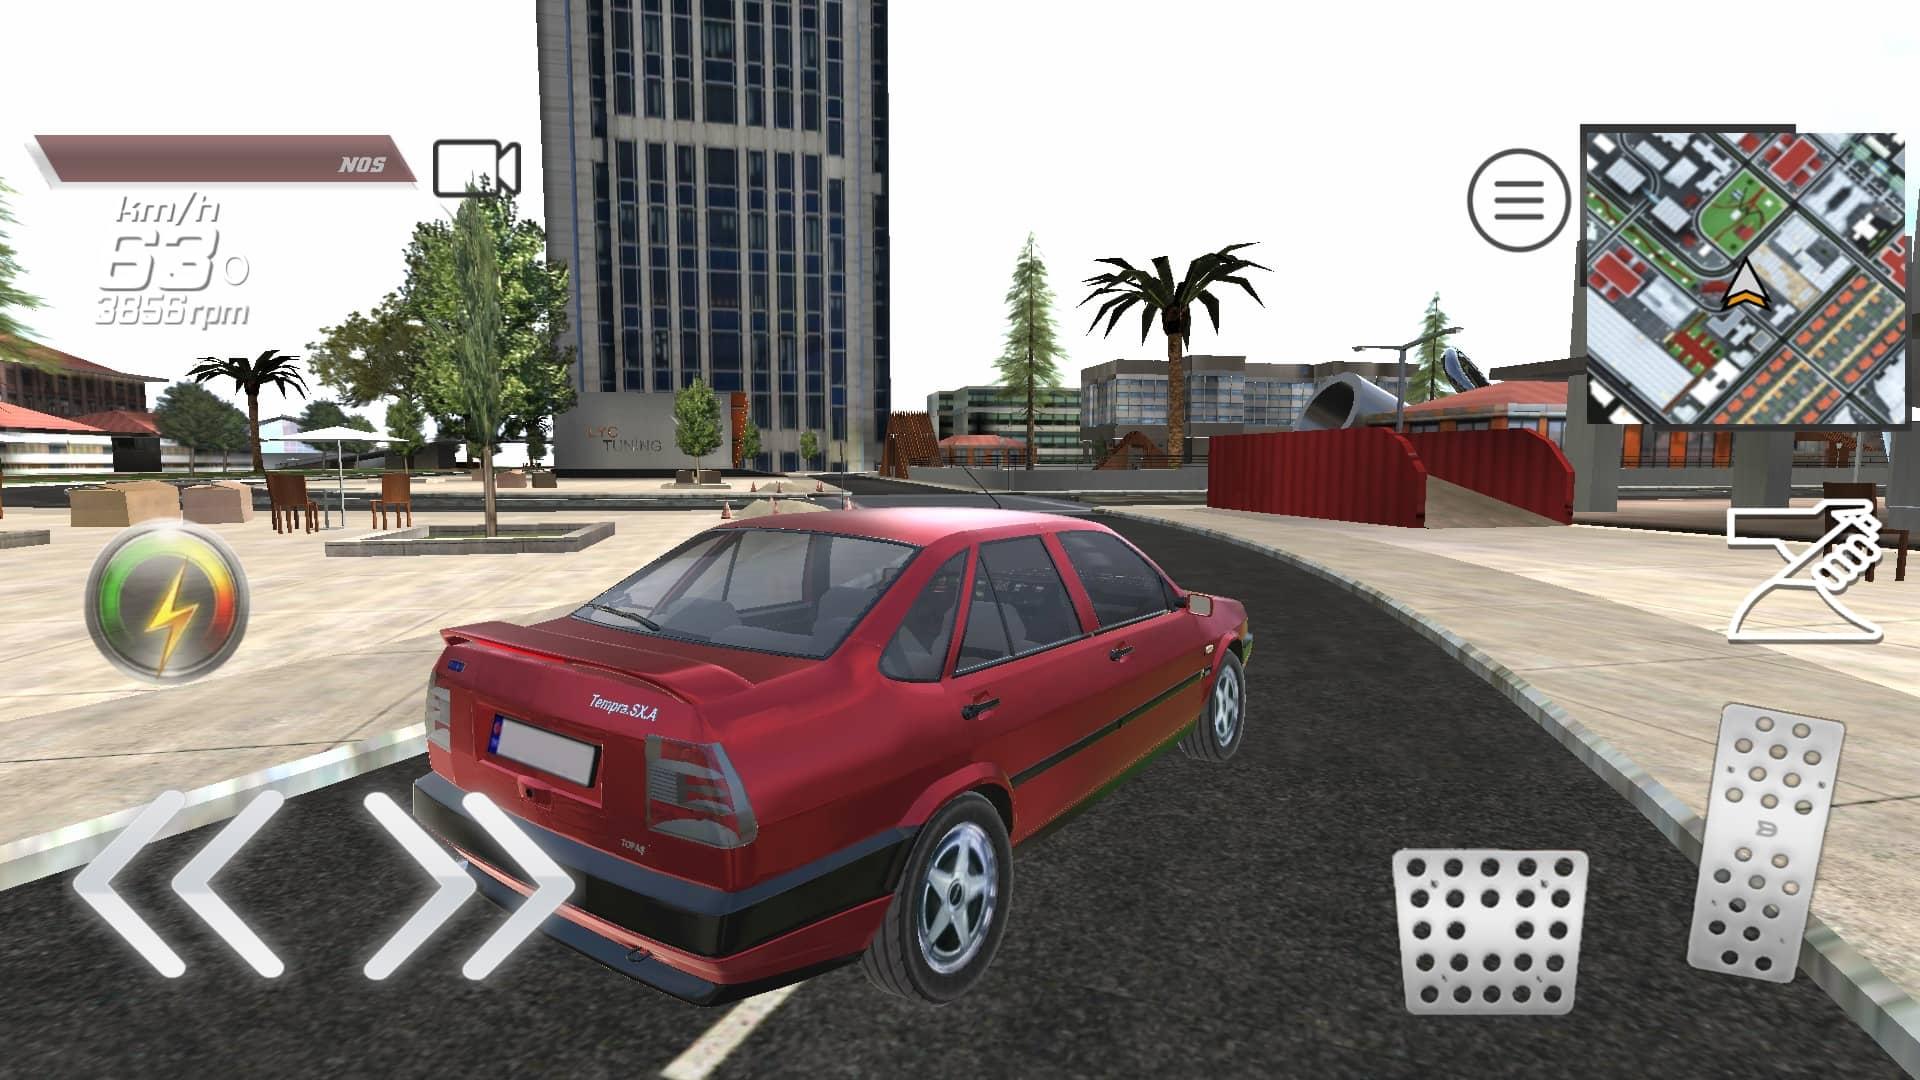 Tempra - City Simulation, Quests and Parking 1.7 Screenshot 12